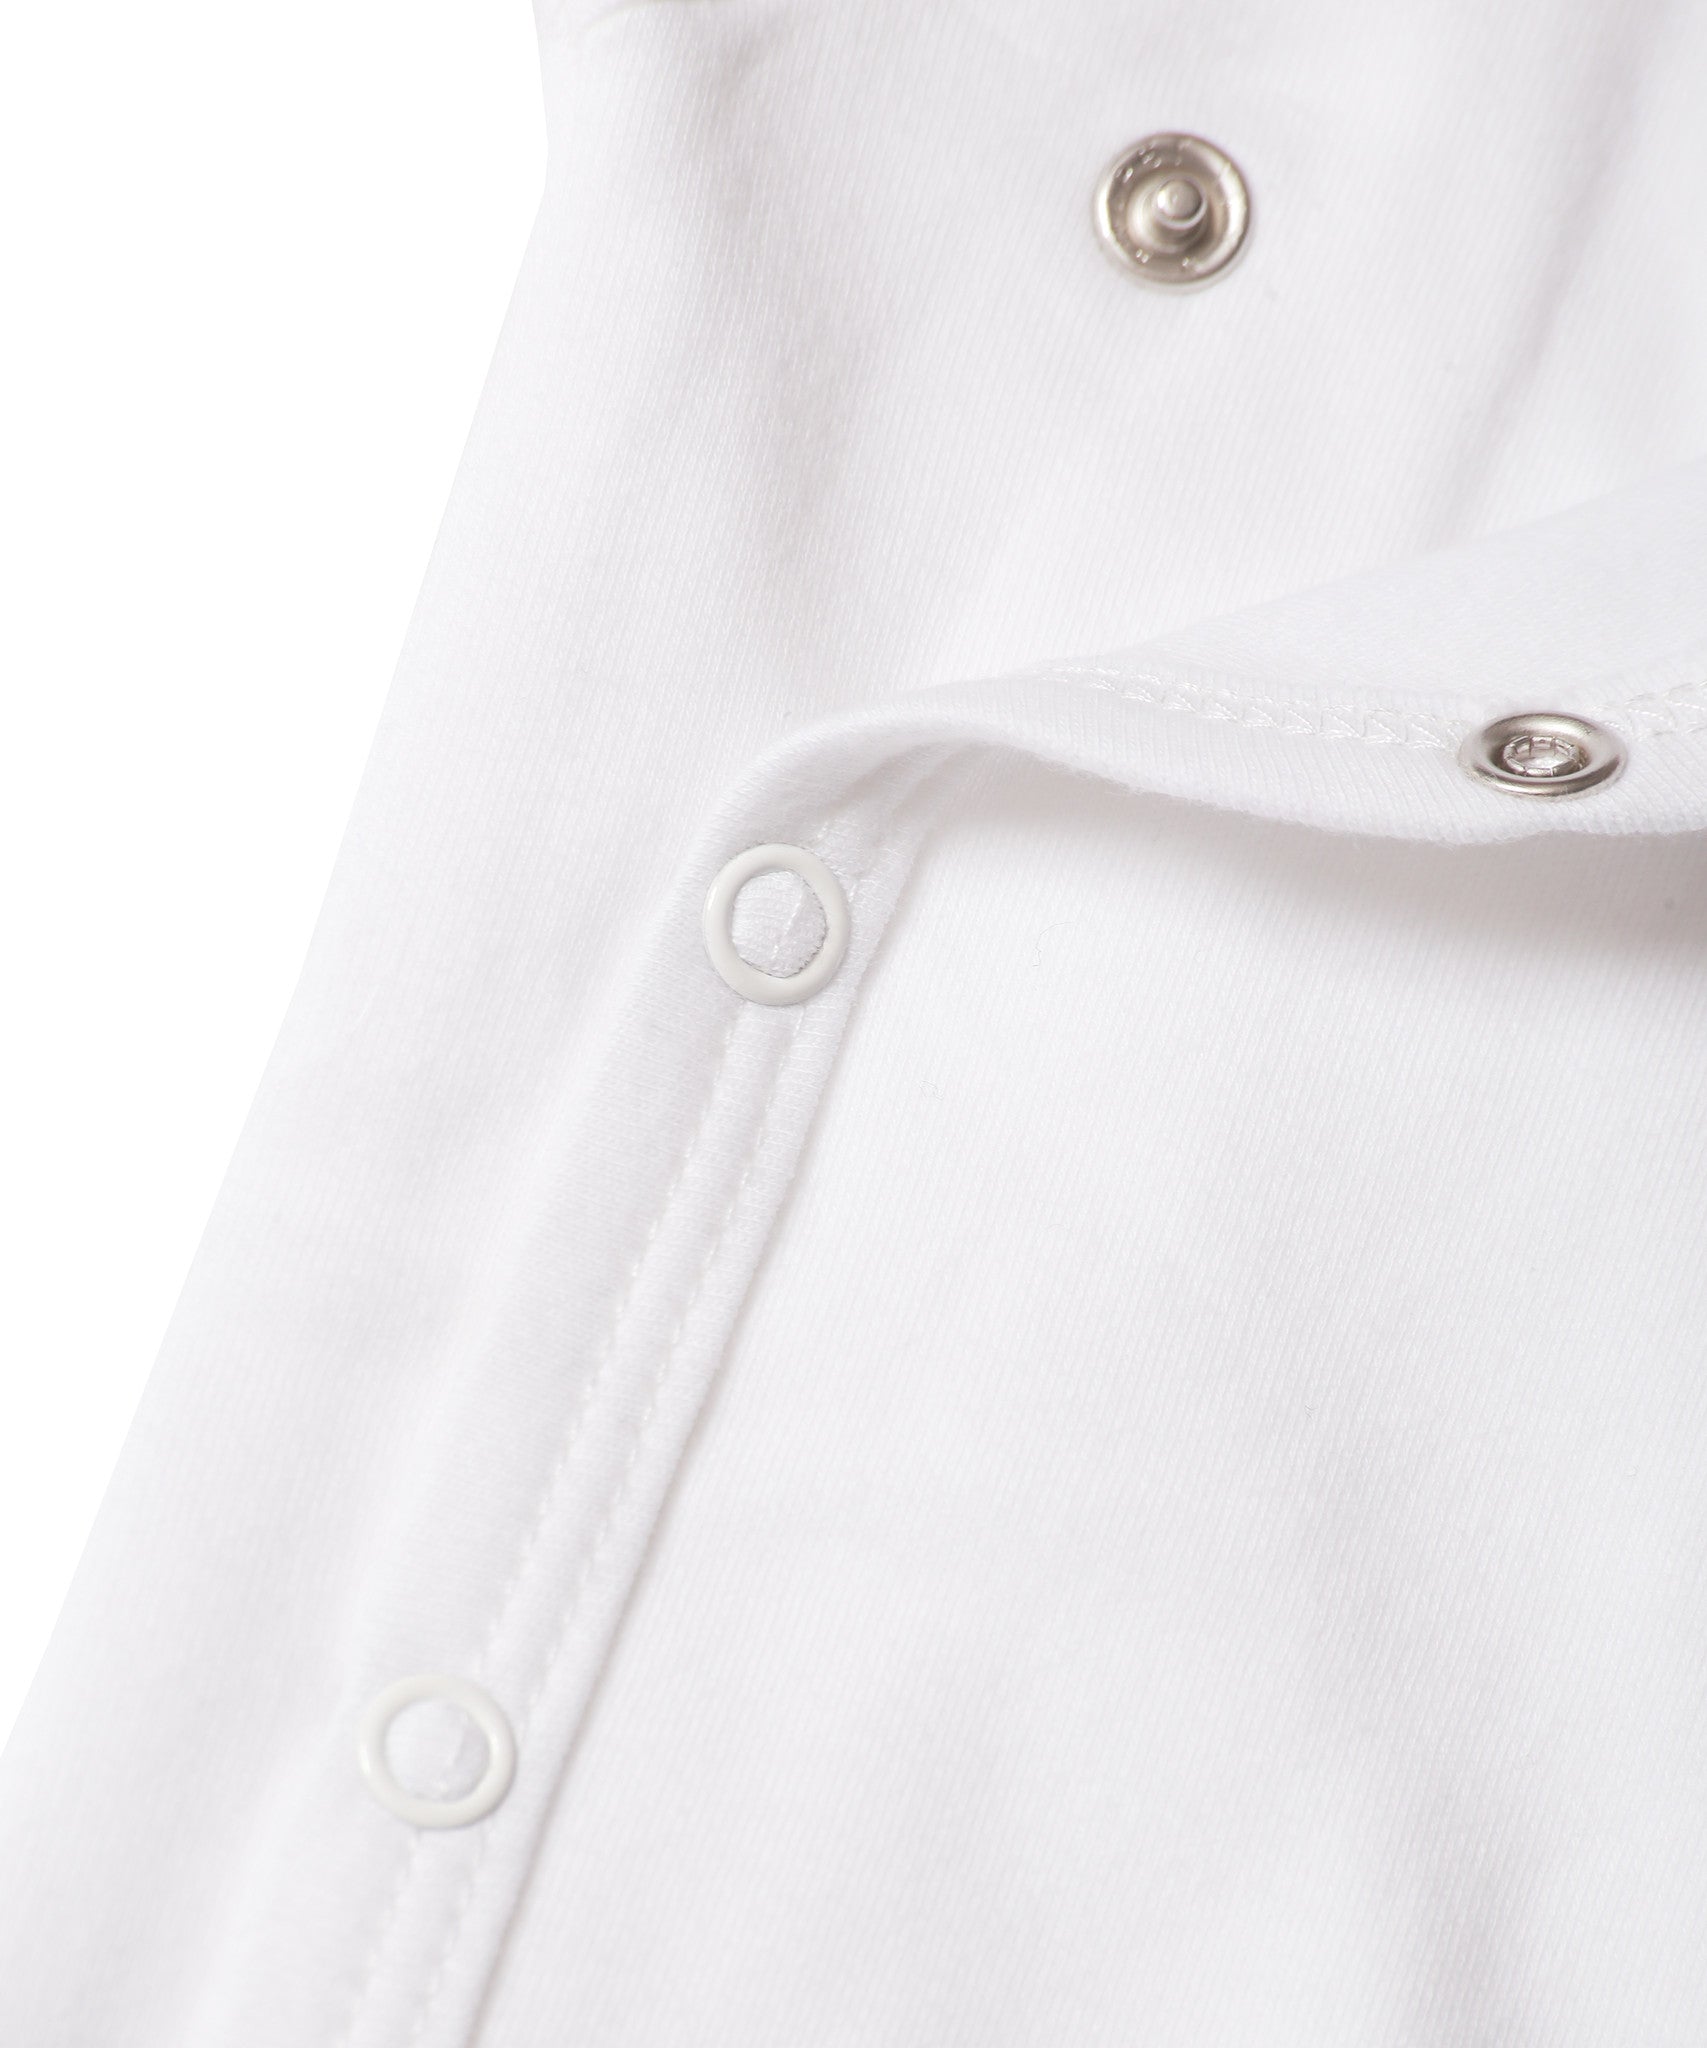 Short Sleeve Kimono Bodysuit Set - White